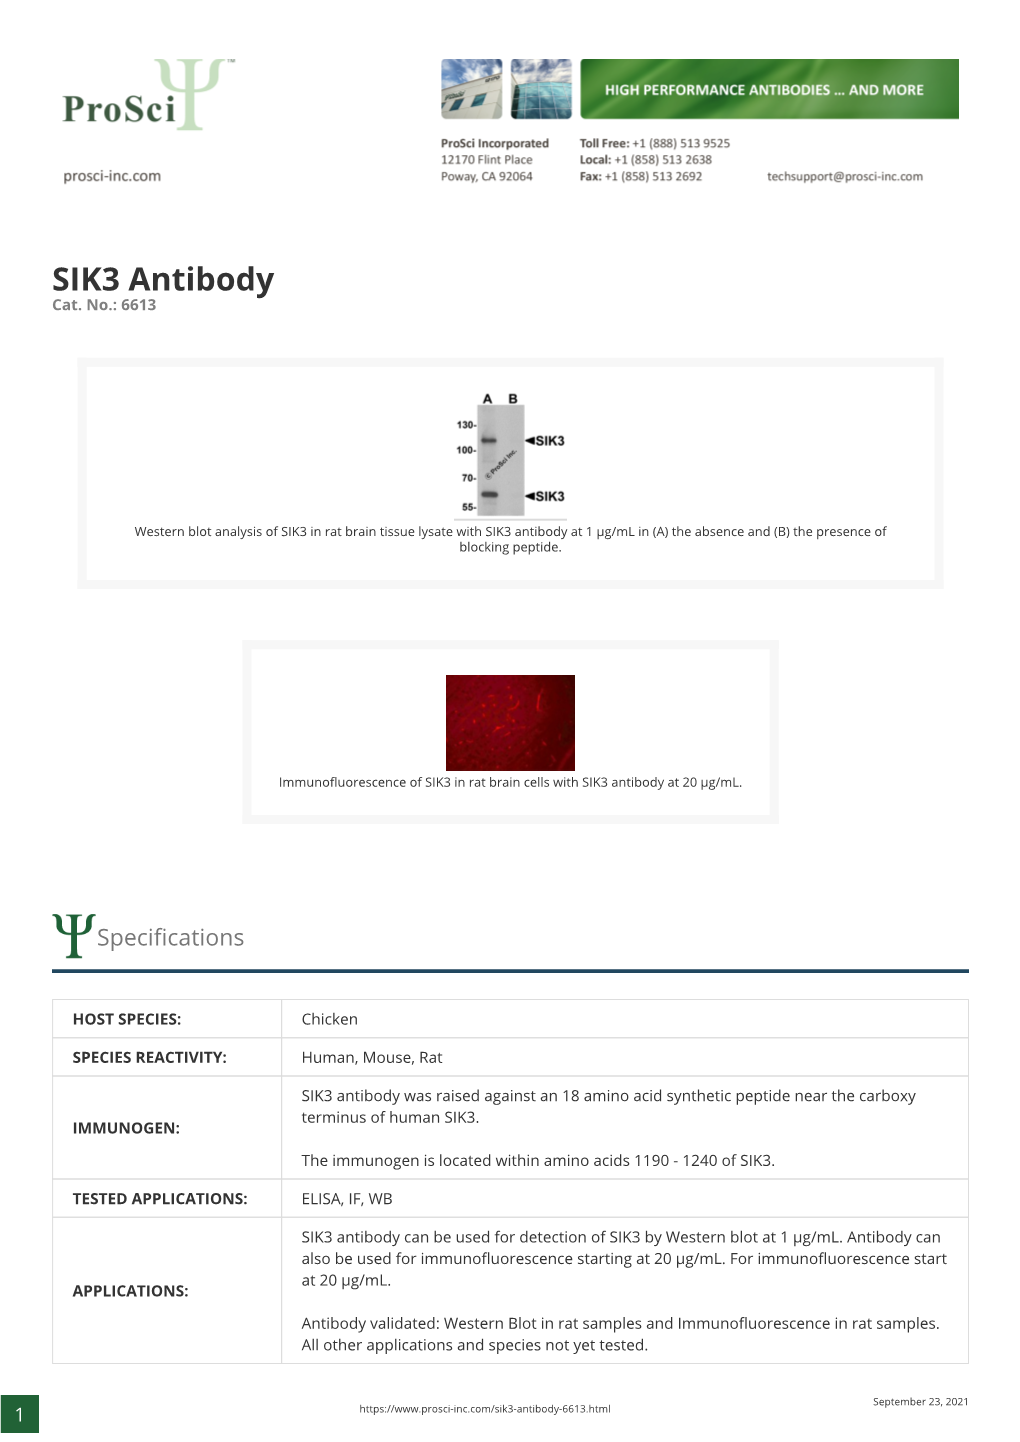 SIK3 Antibody Cat